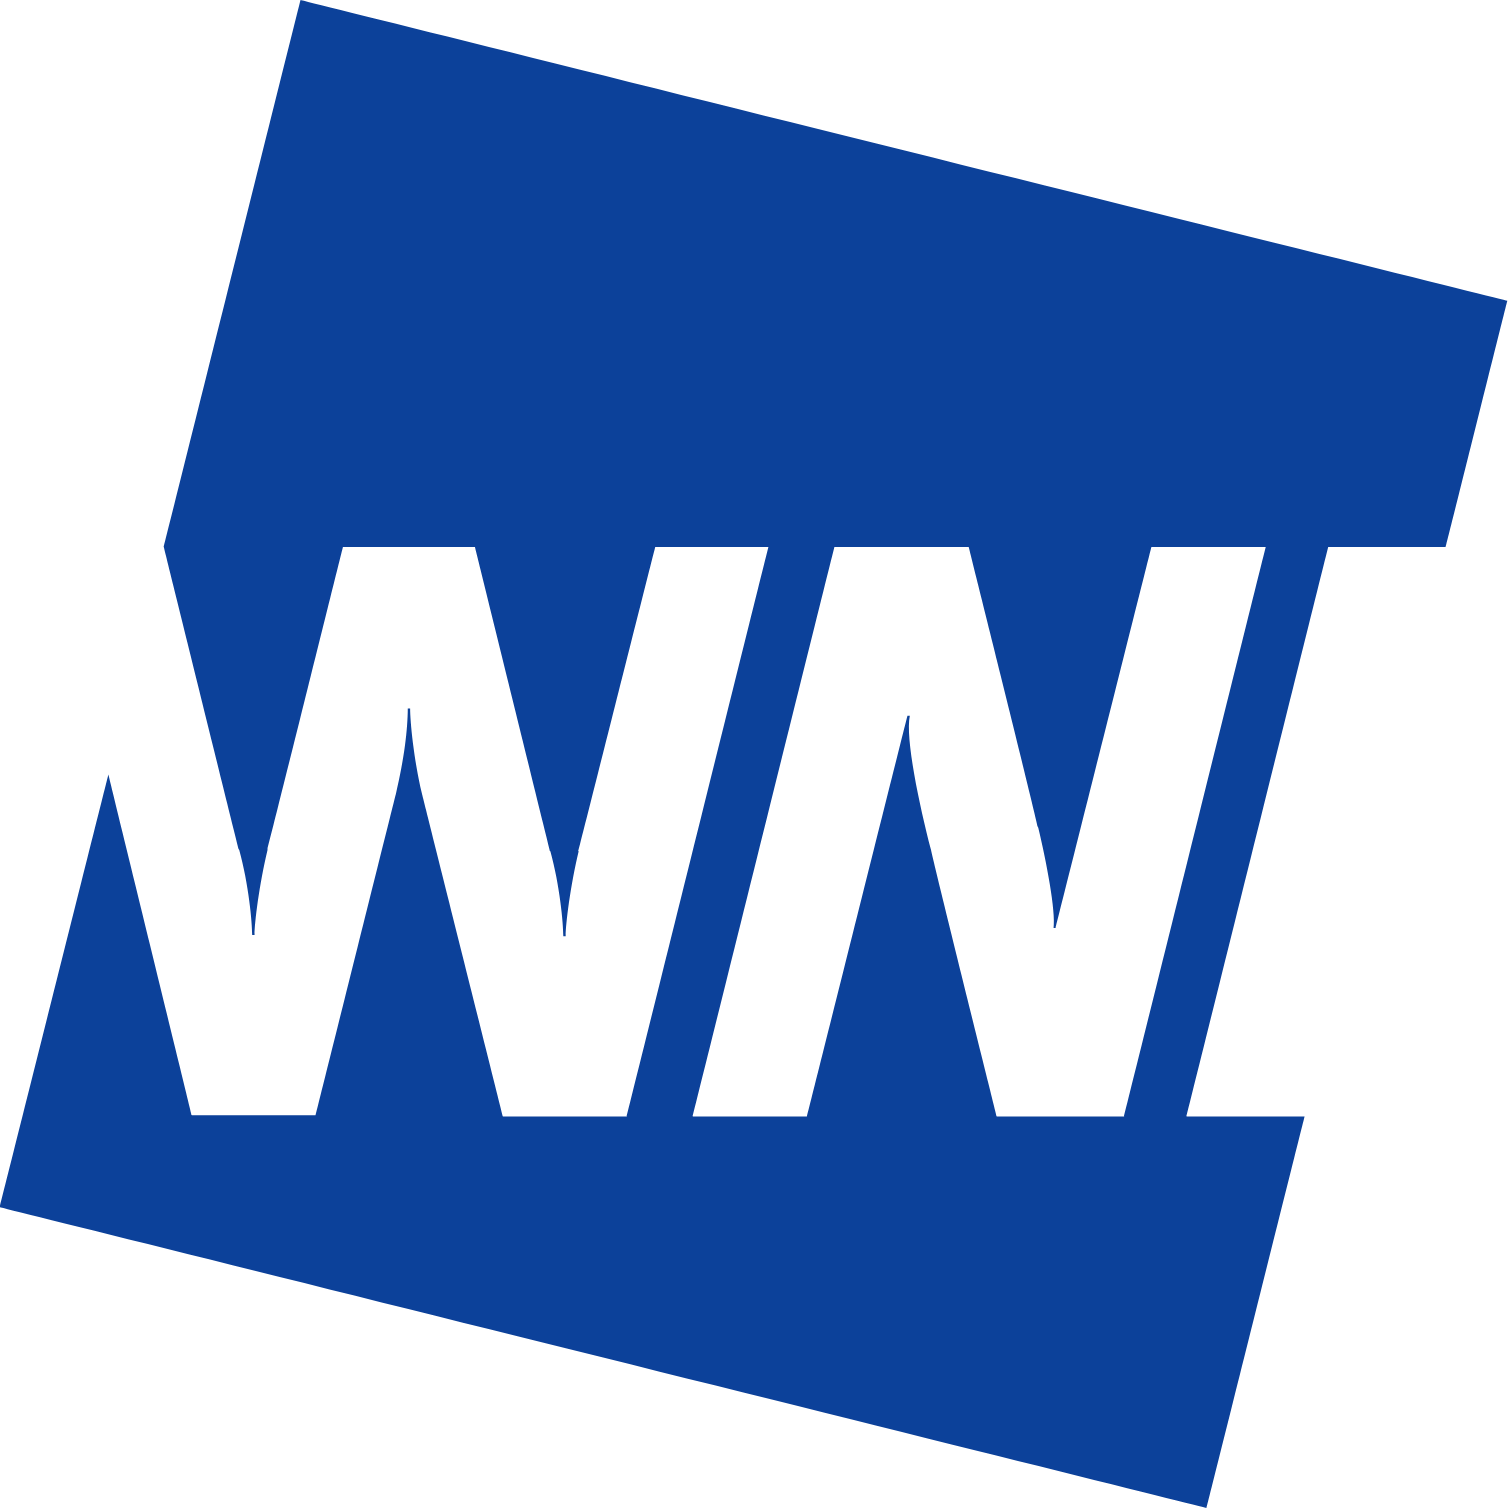 Weathernews Inc. logo (transparent PNG)